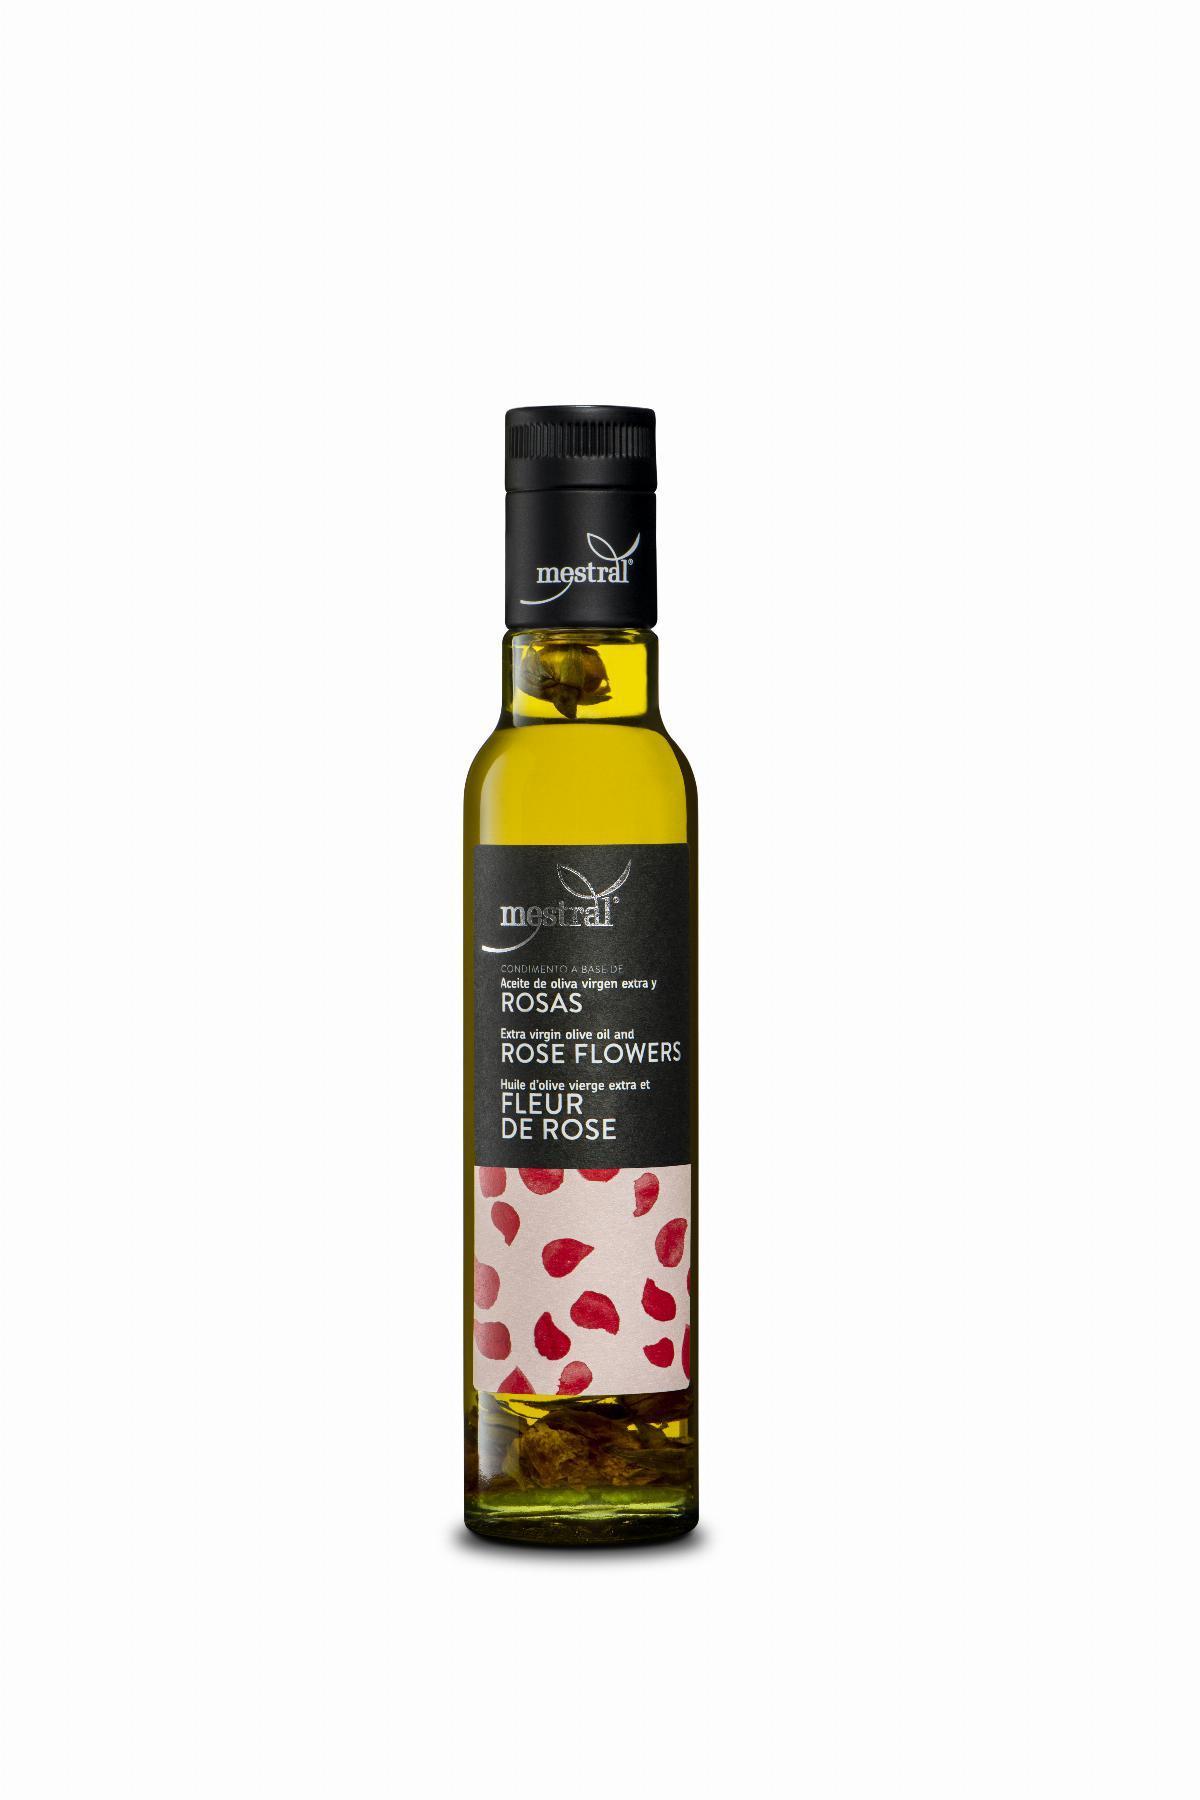 Olive Oil & Seasonings - Oli d'Oliva Verge Extra Mestral amb Roses, ampolla Dòrica transparent, 250ml, ES-EN-FR - Mestral Cambrils